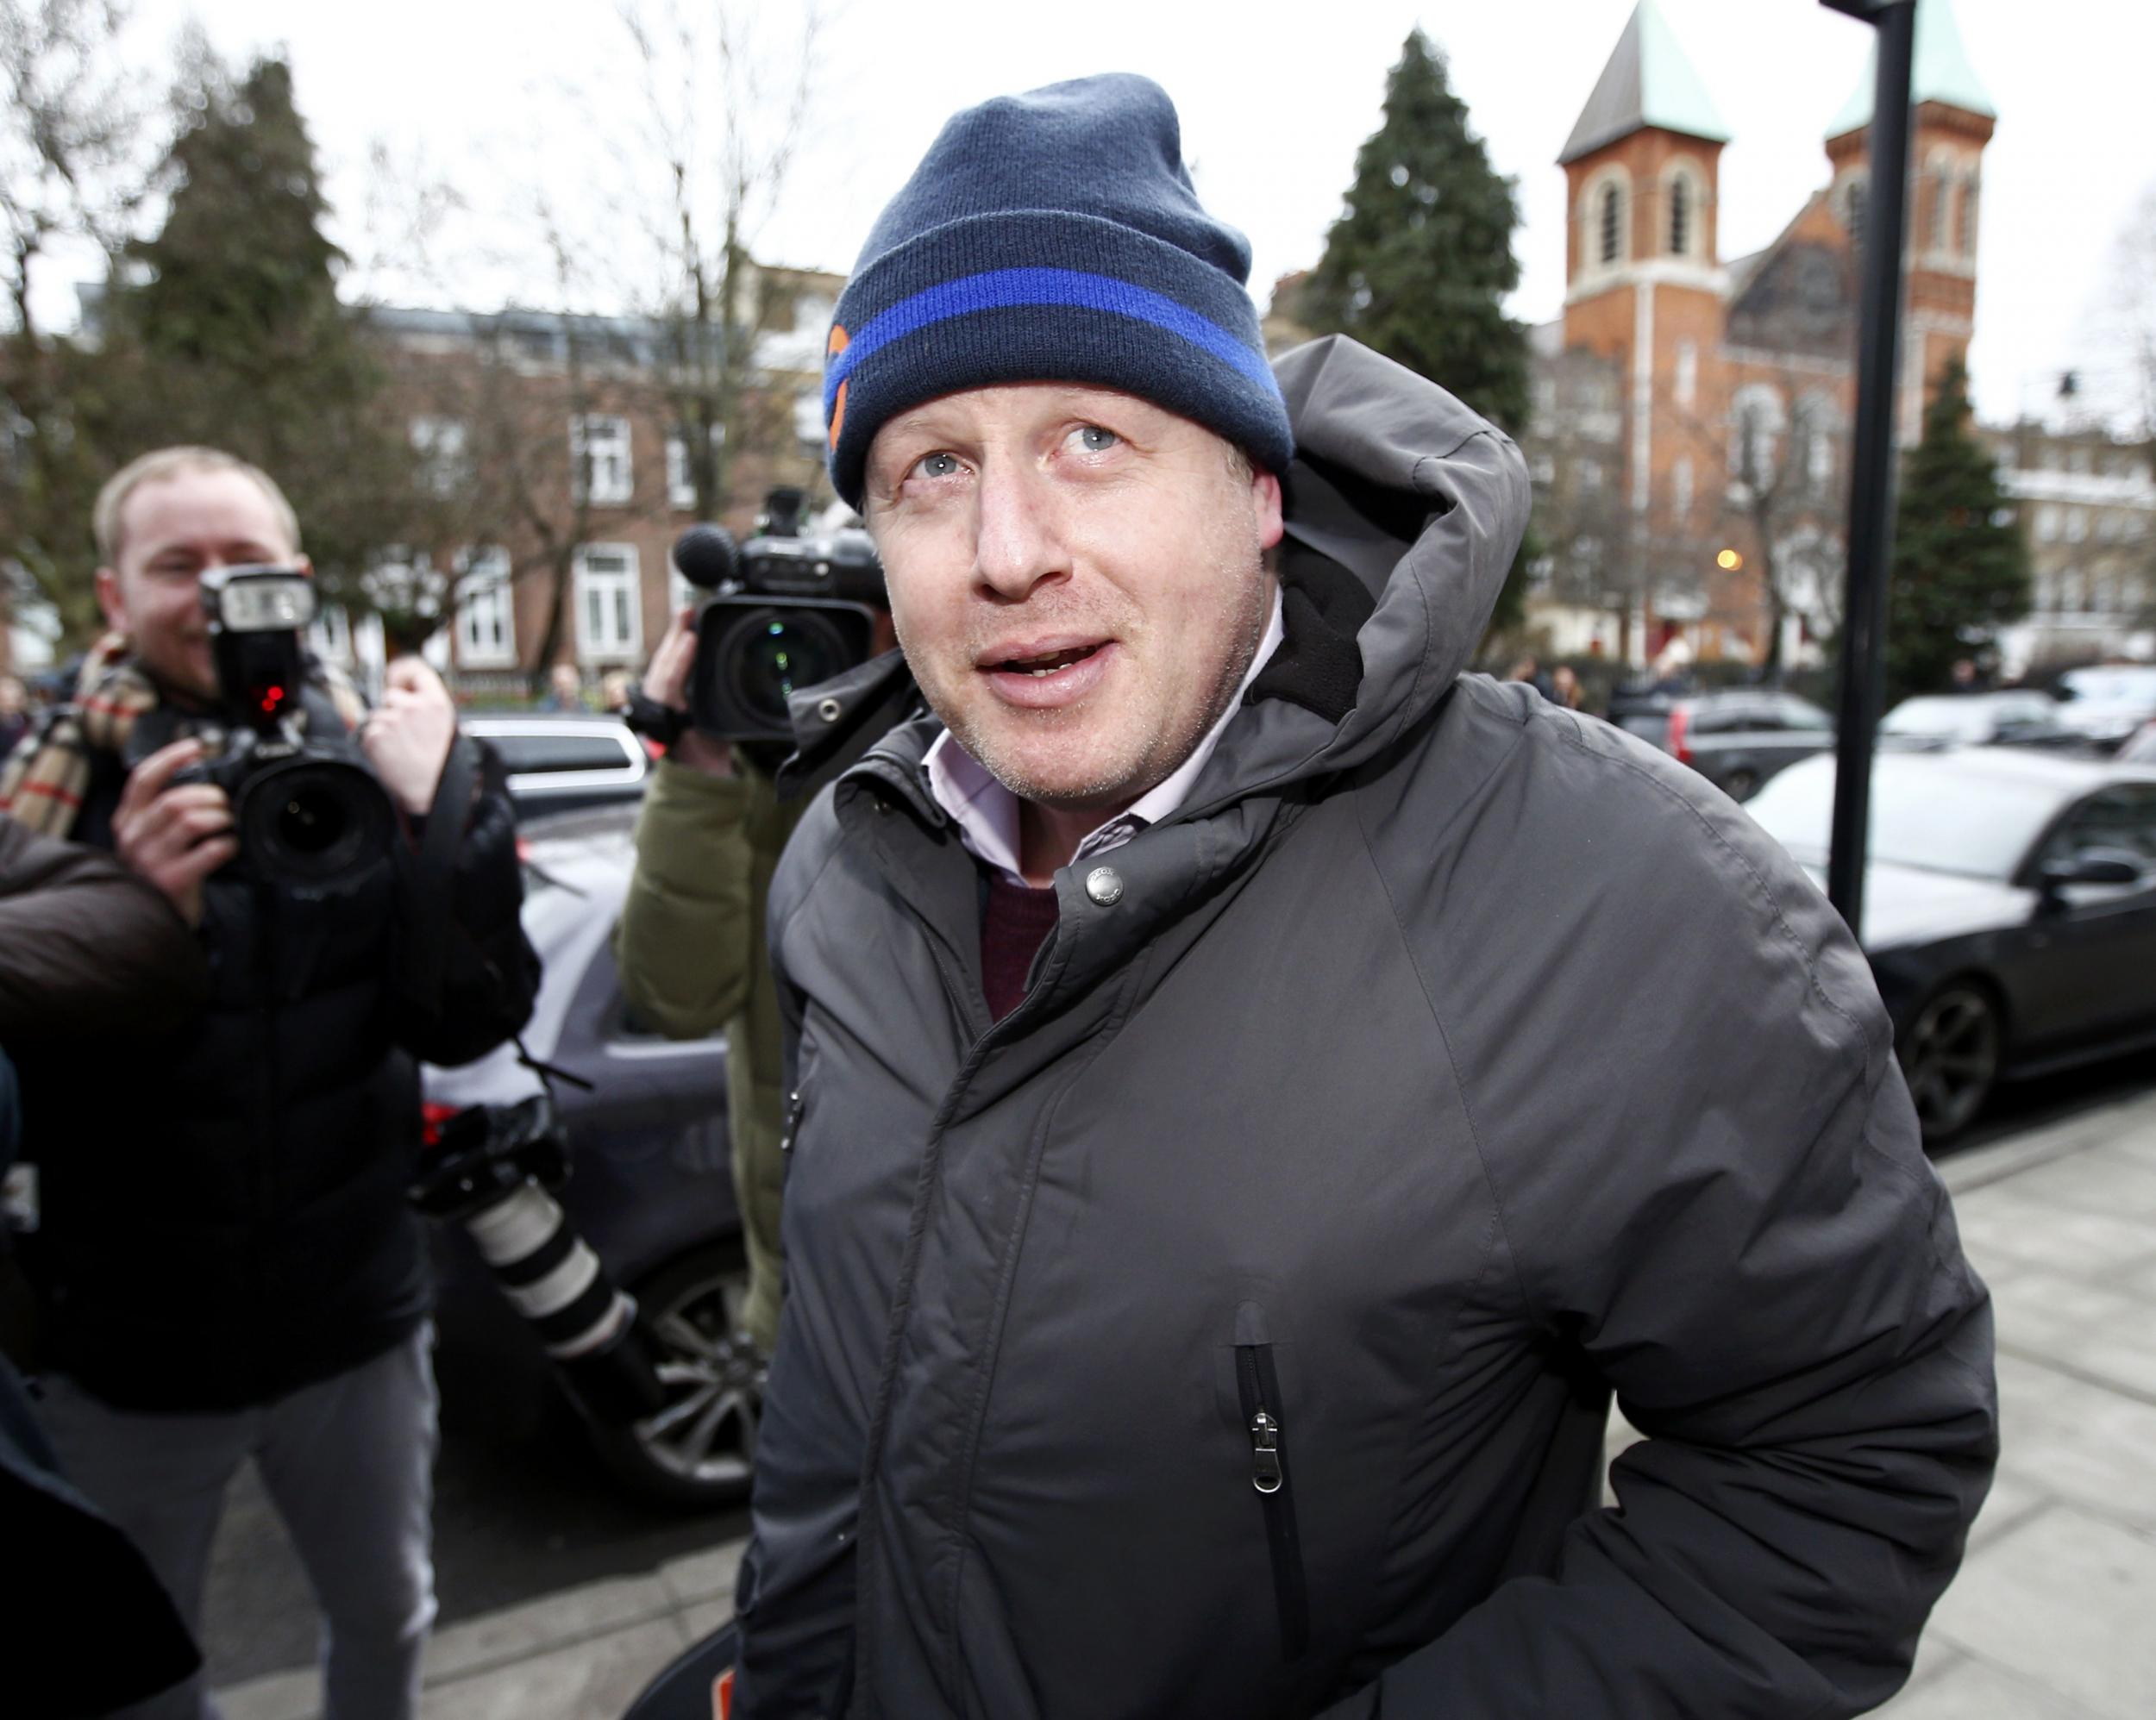 London Mayor Boris Johnson arrives back at his home